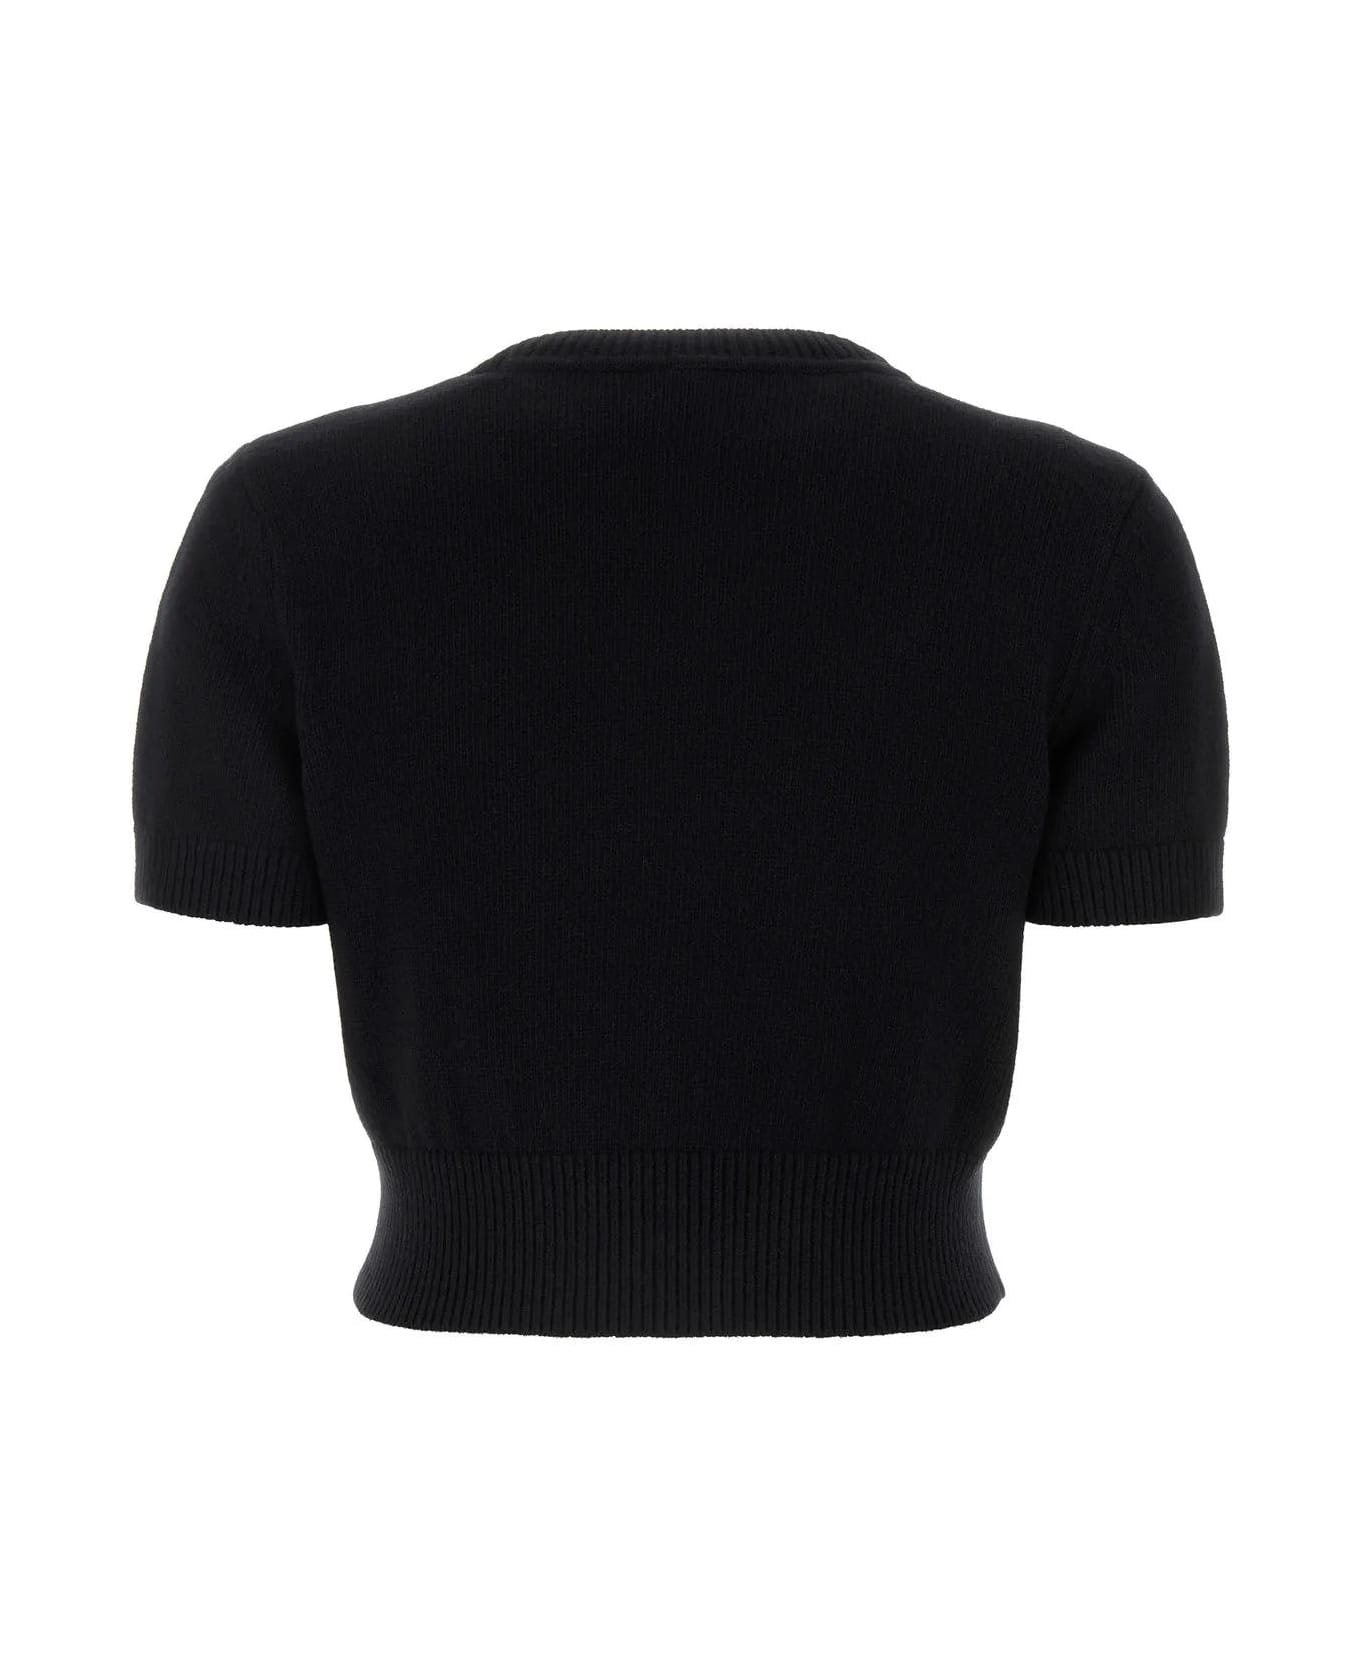 Alexander Wang Black Cotton Blend Sweater - Black ニットウェア